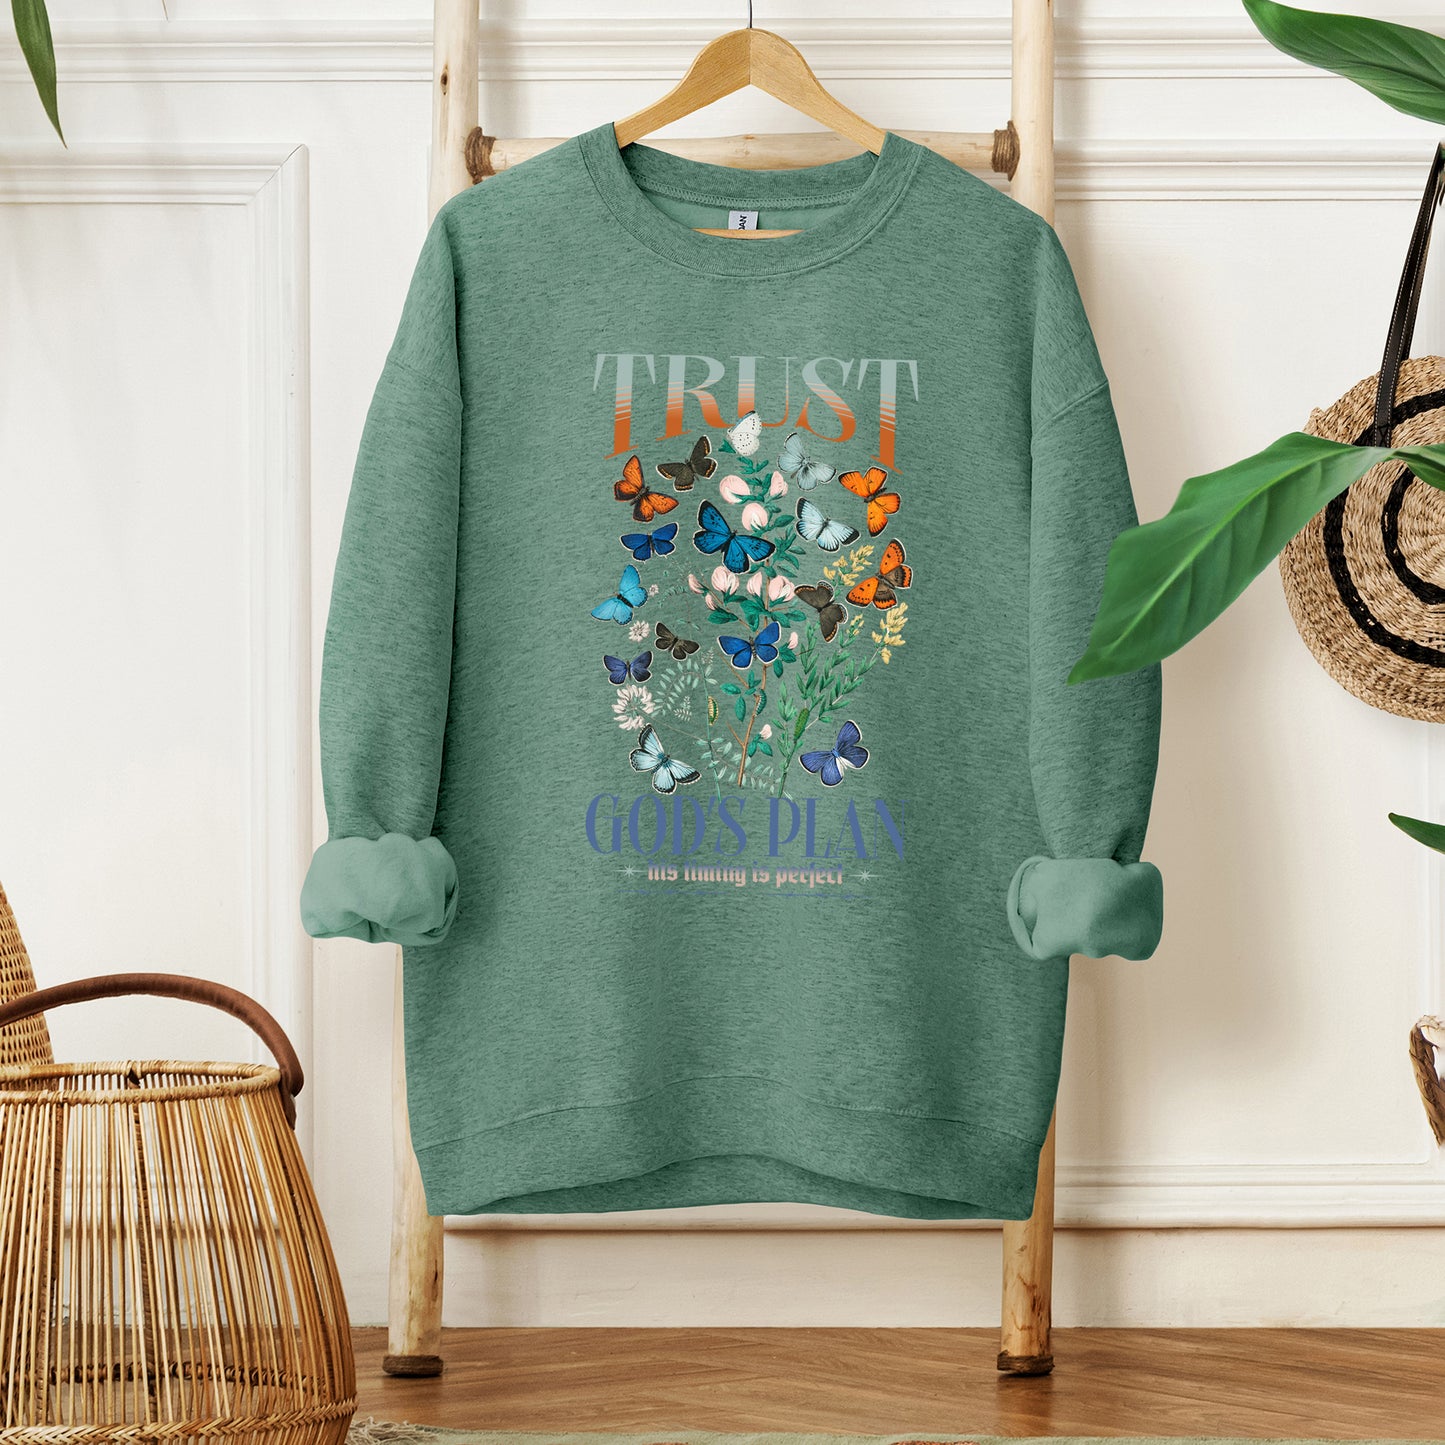 Trust God's Plans Butterflies | Sweatshirt